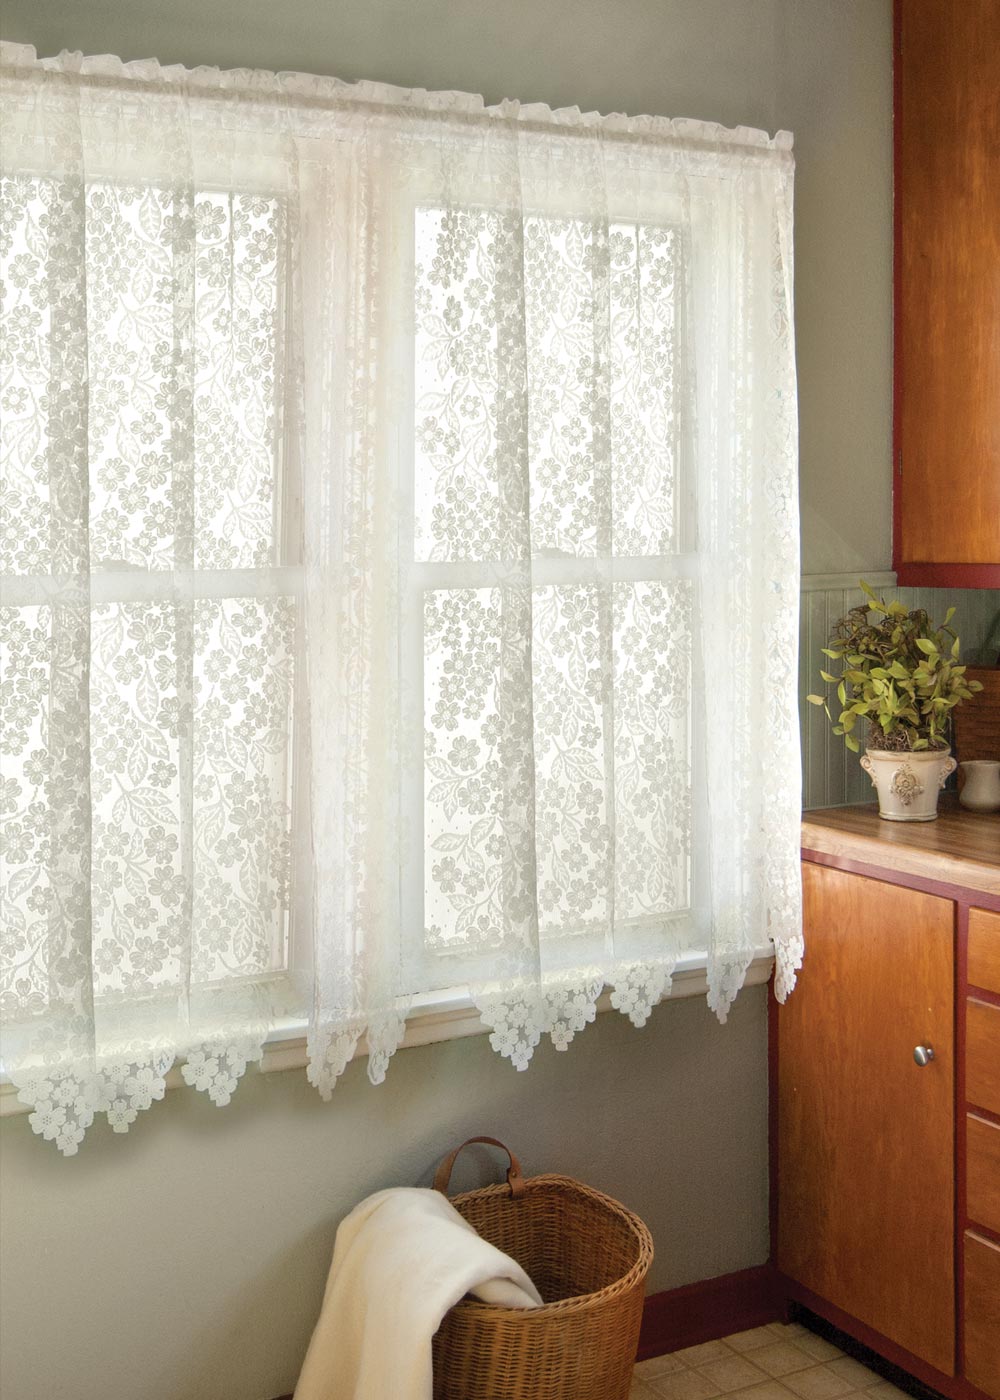 Irish Lace Curtains in Curtain